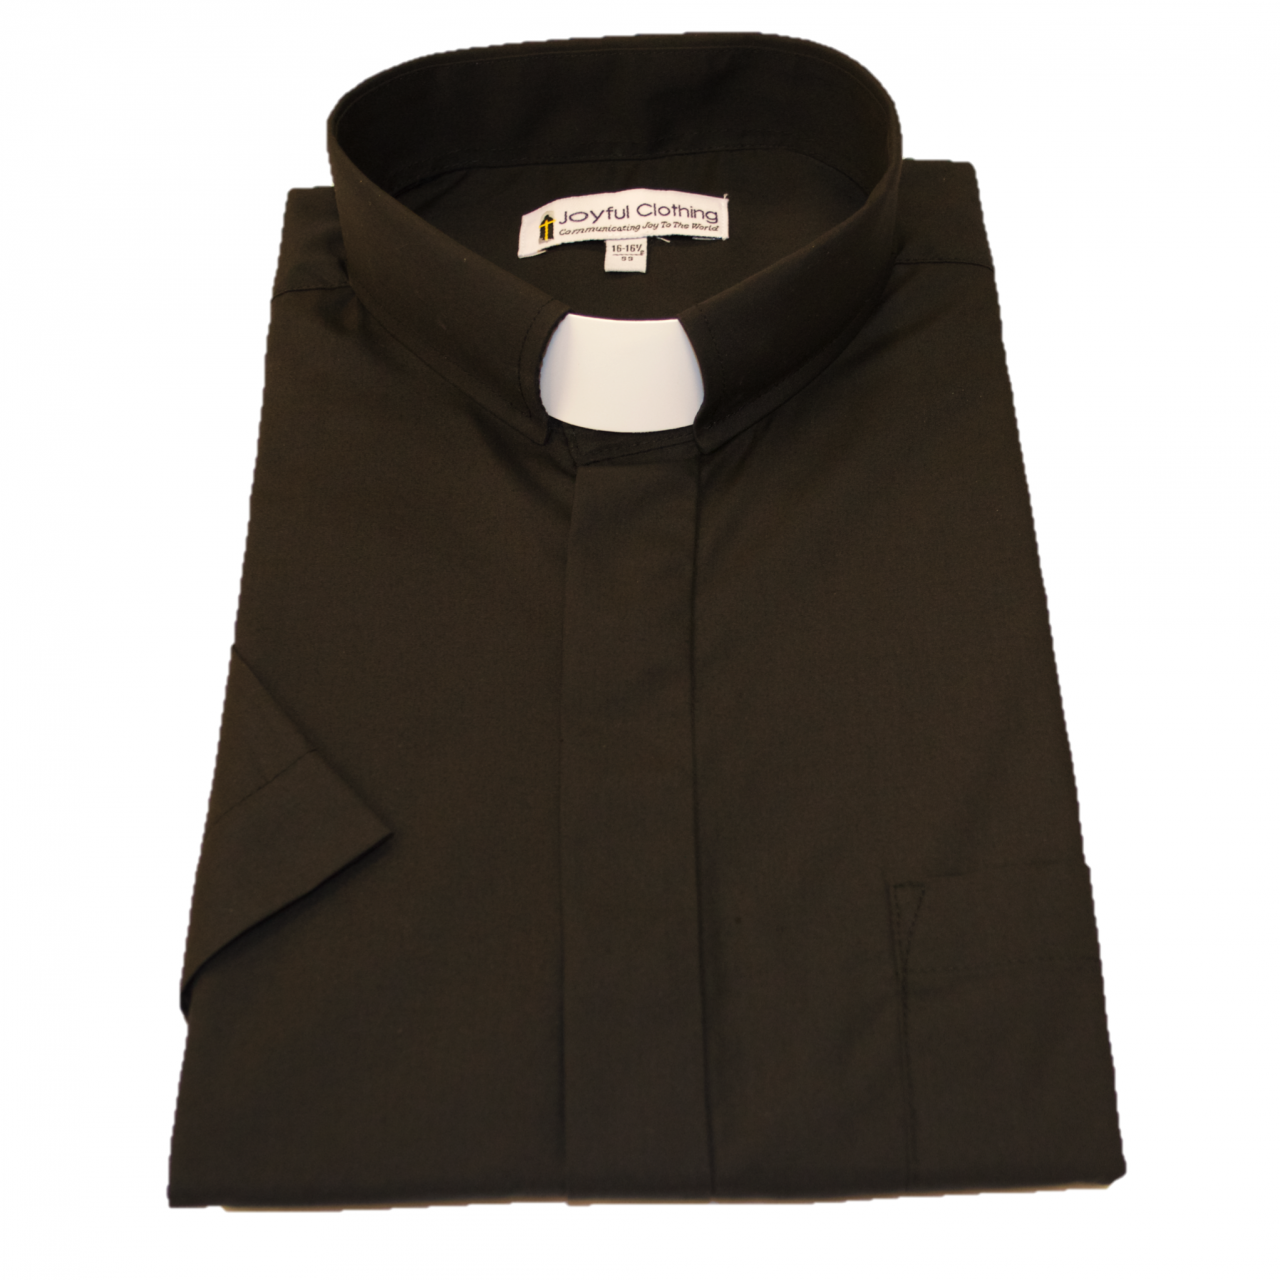 151. Men's Short-Sleeve Tab-Collar Clergy Shirt - Black